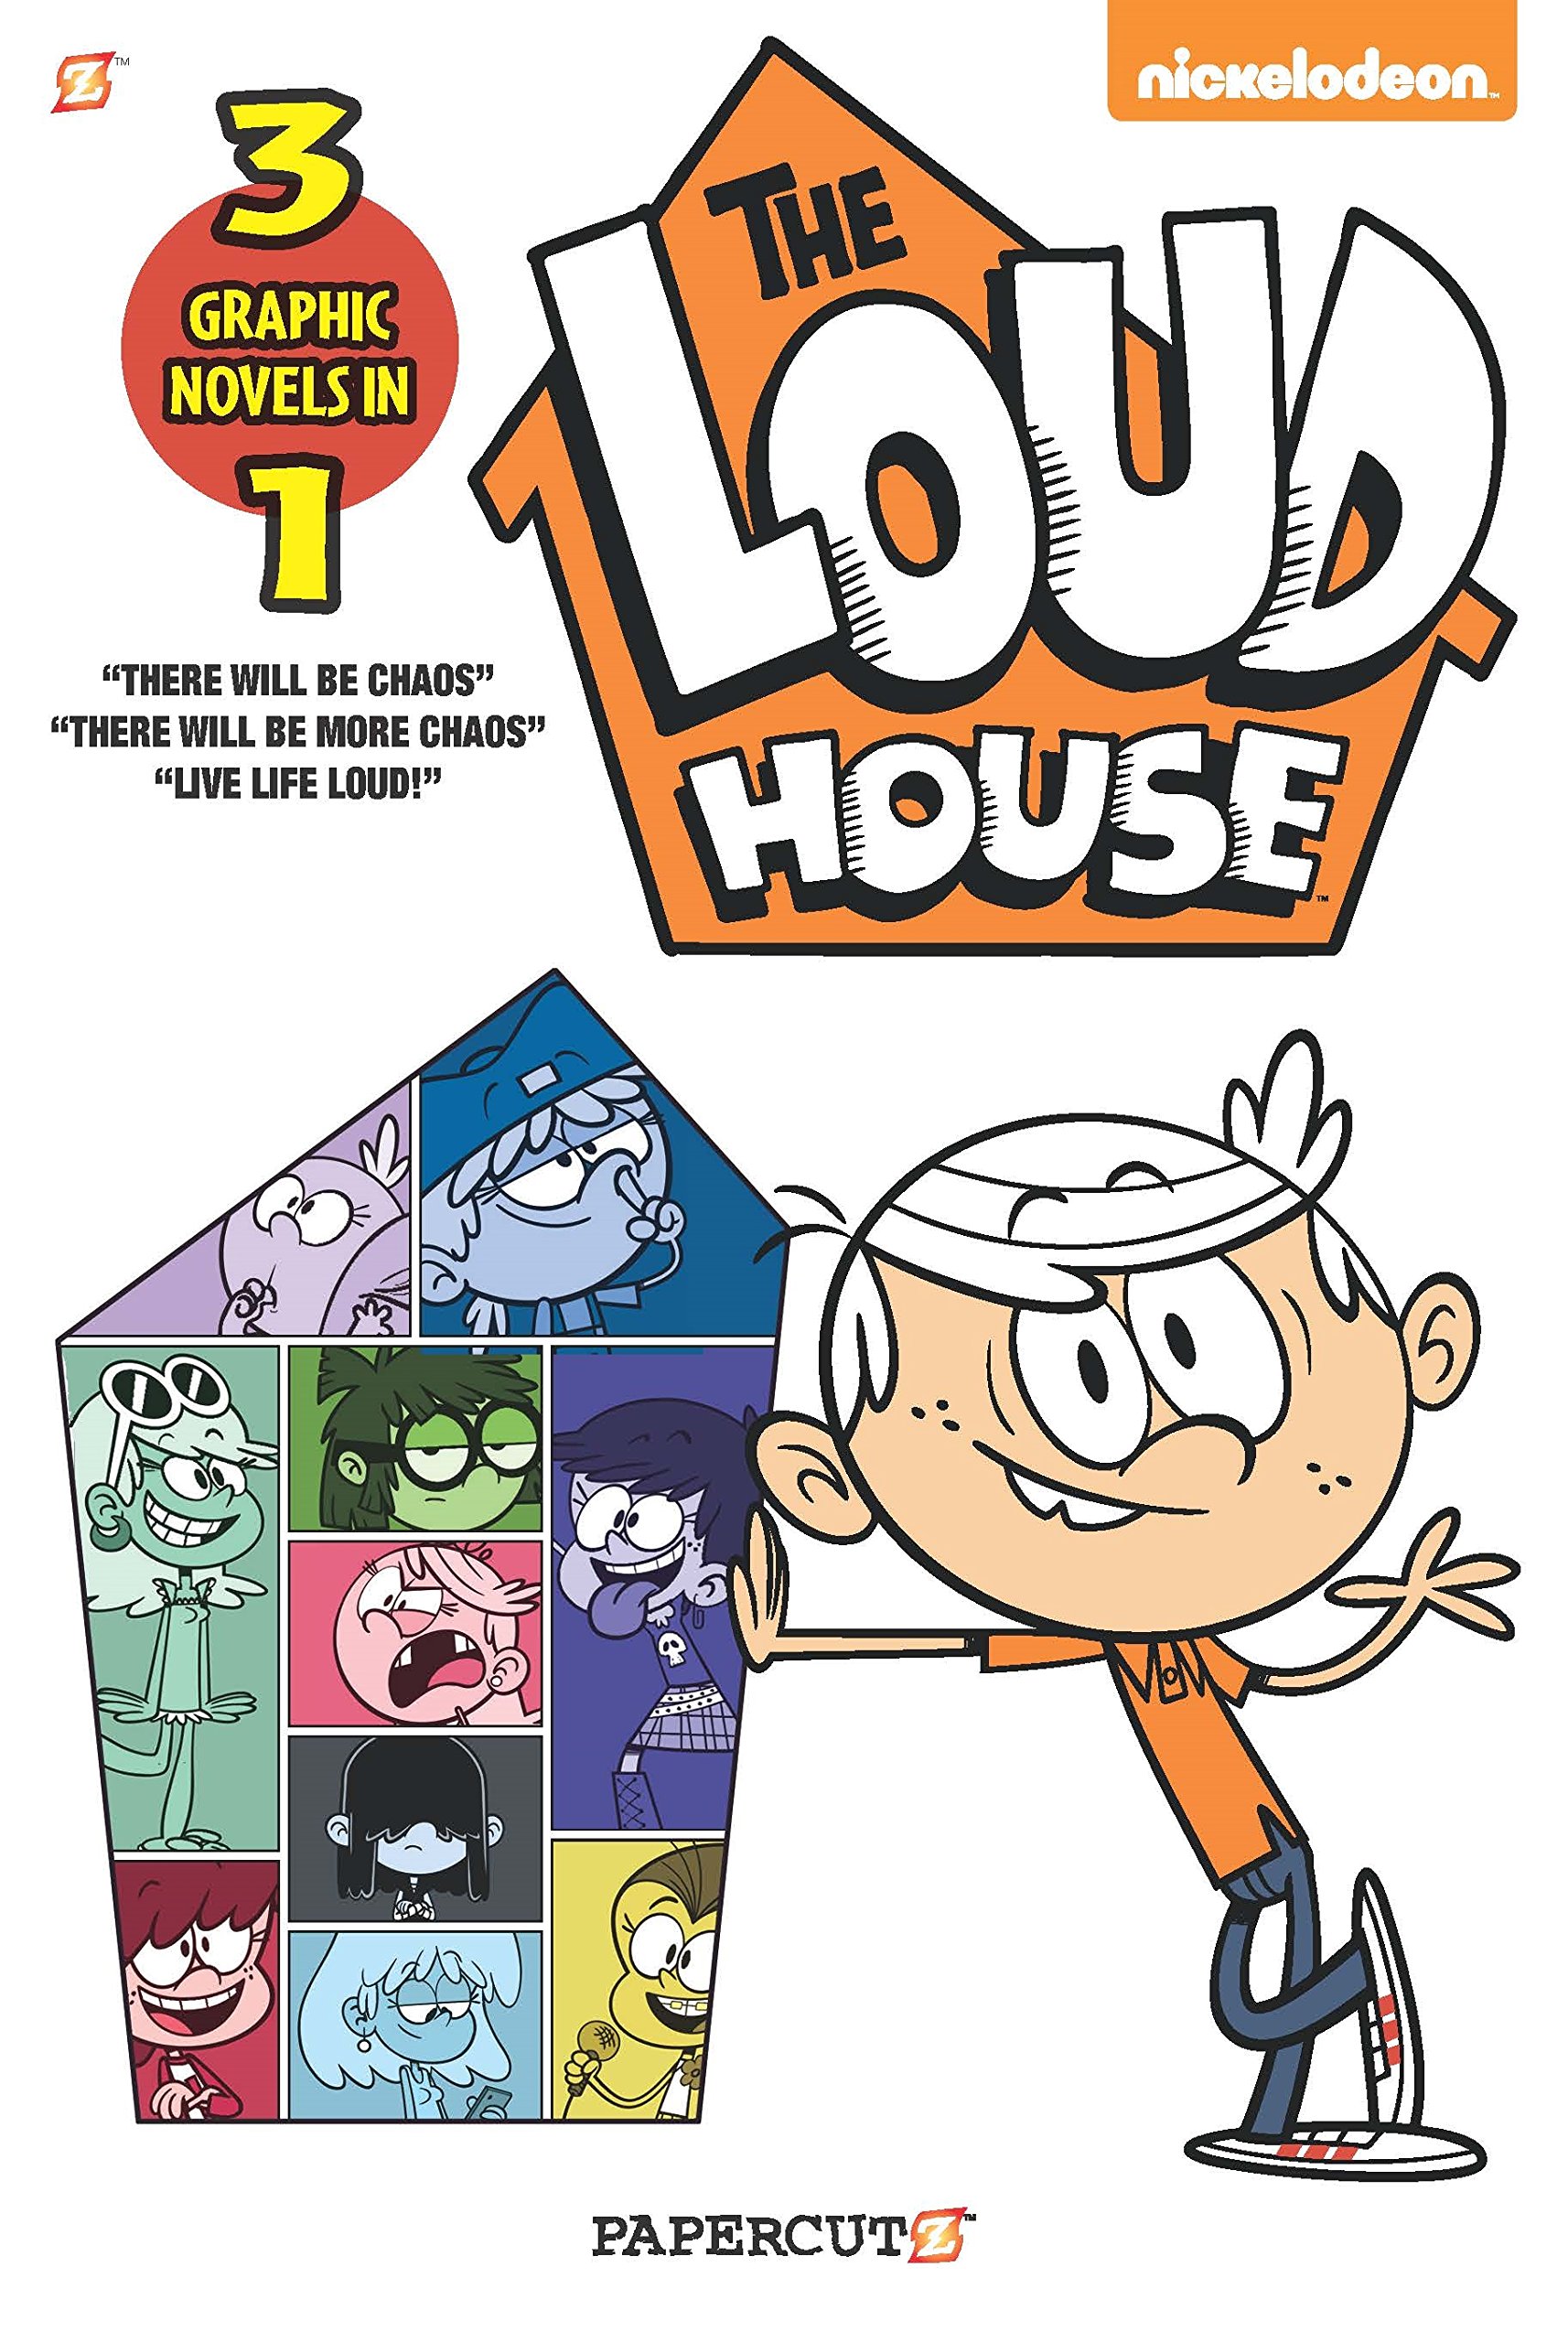 Amazon.com: The Loud House 3.